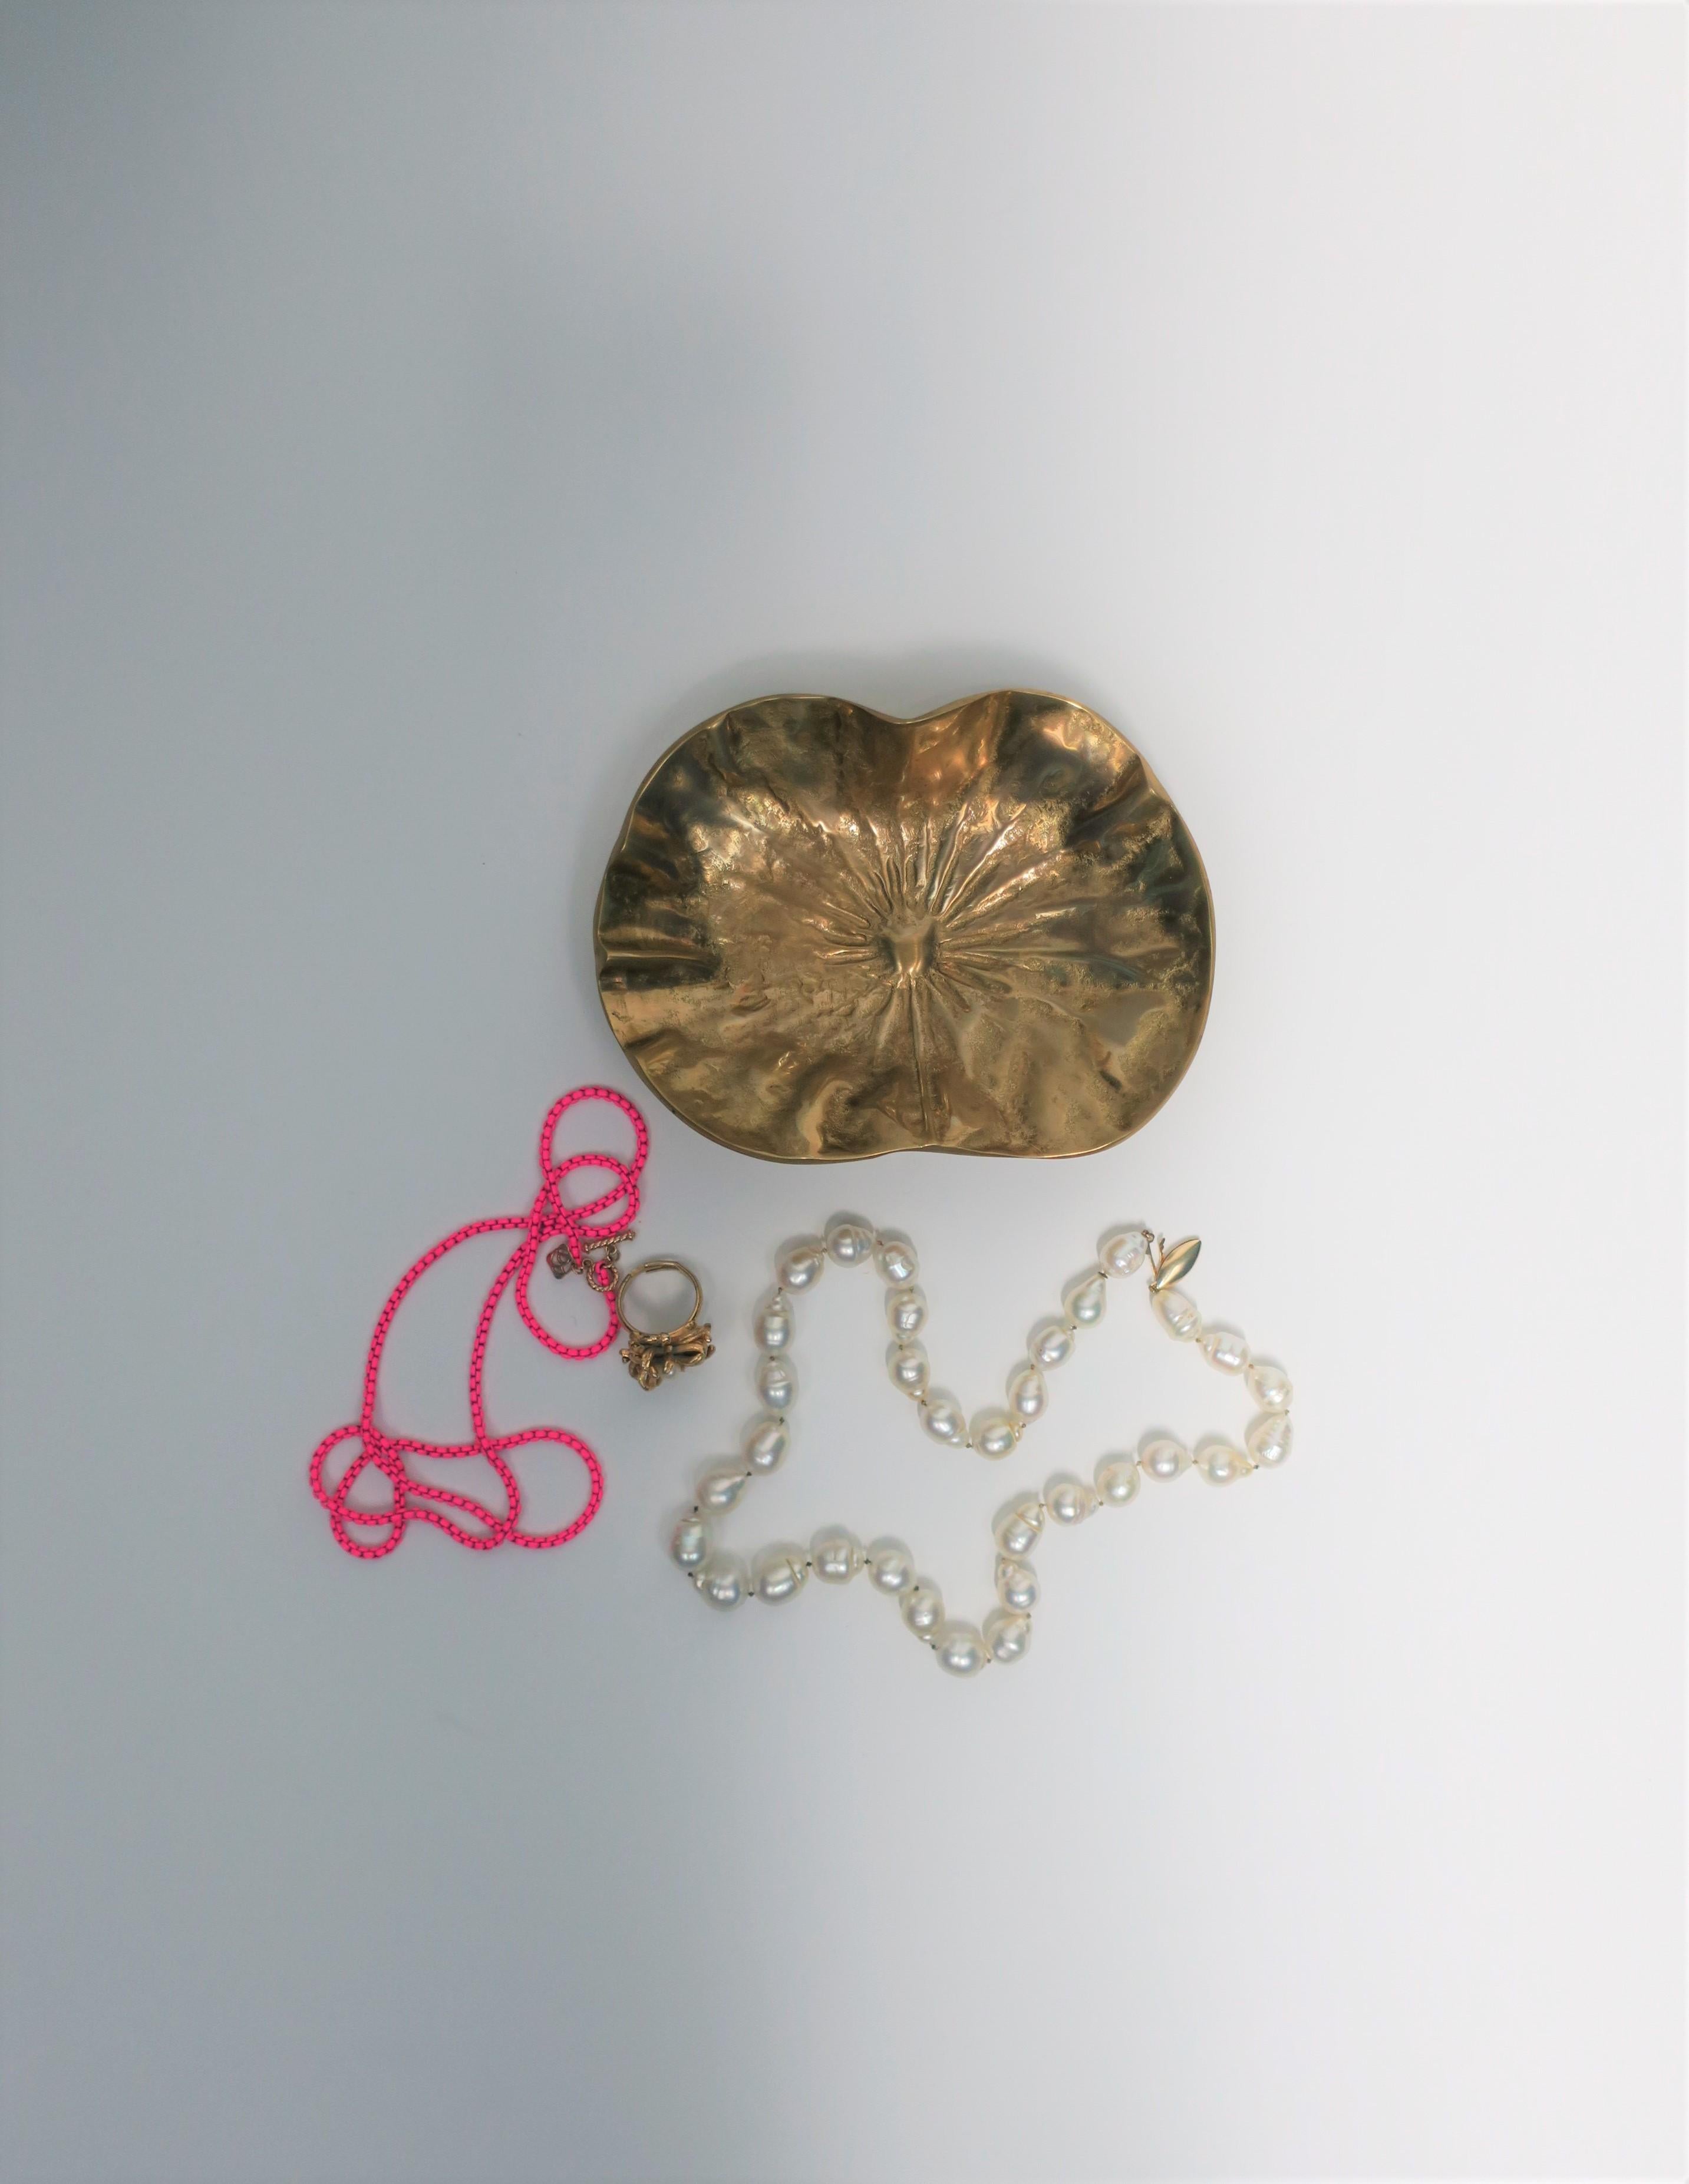 Brass Jewelry Dish Lotus Flower by Designer Kelly Wearstler For Sale 6